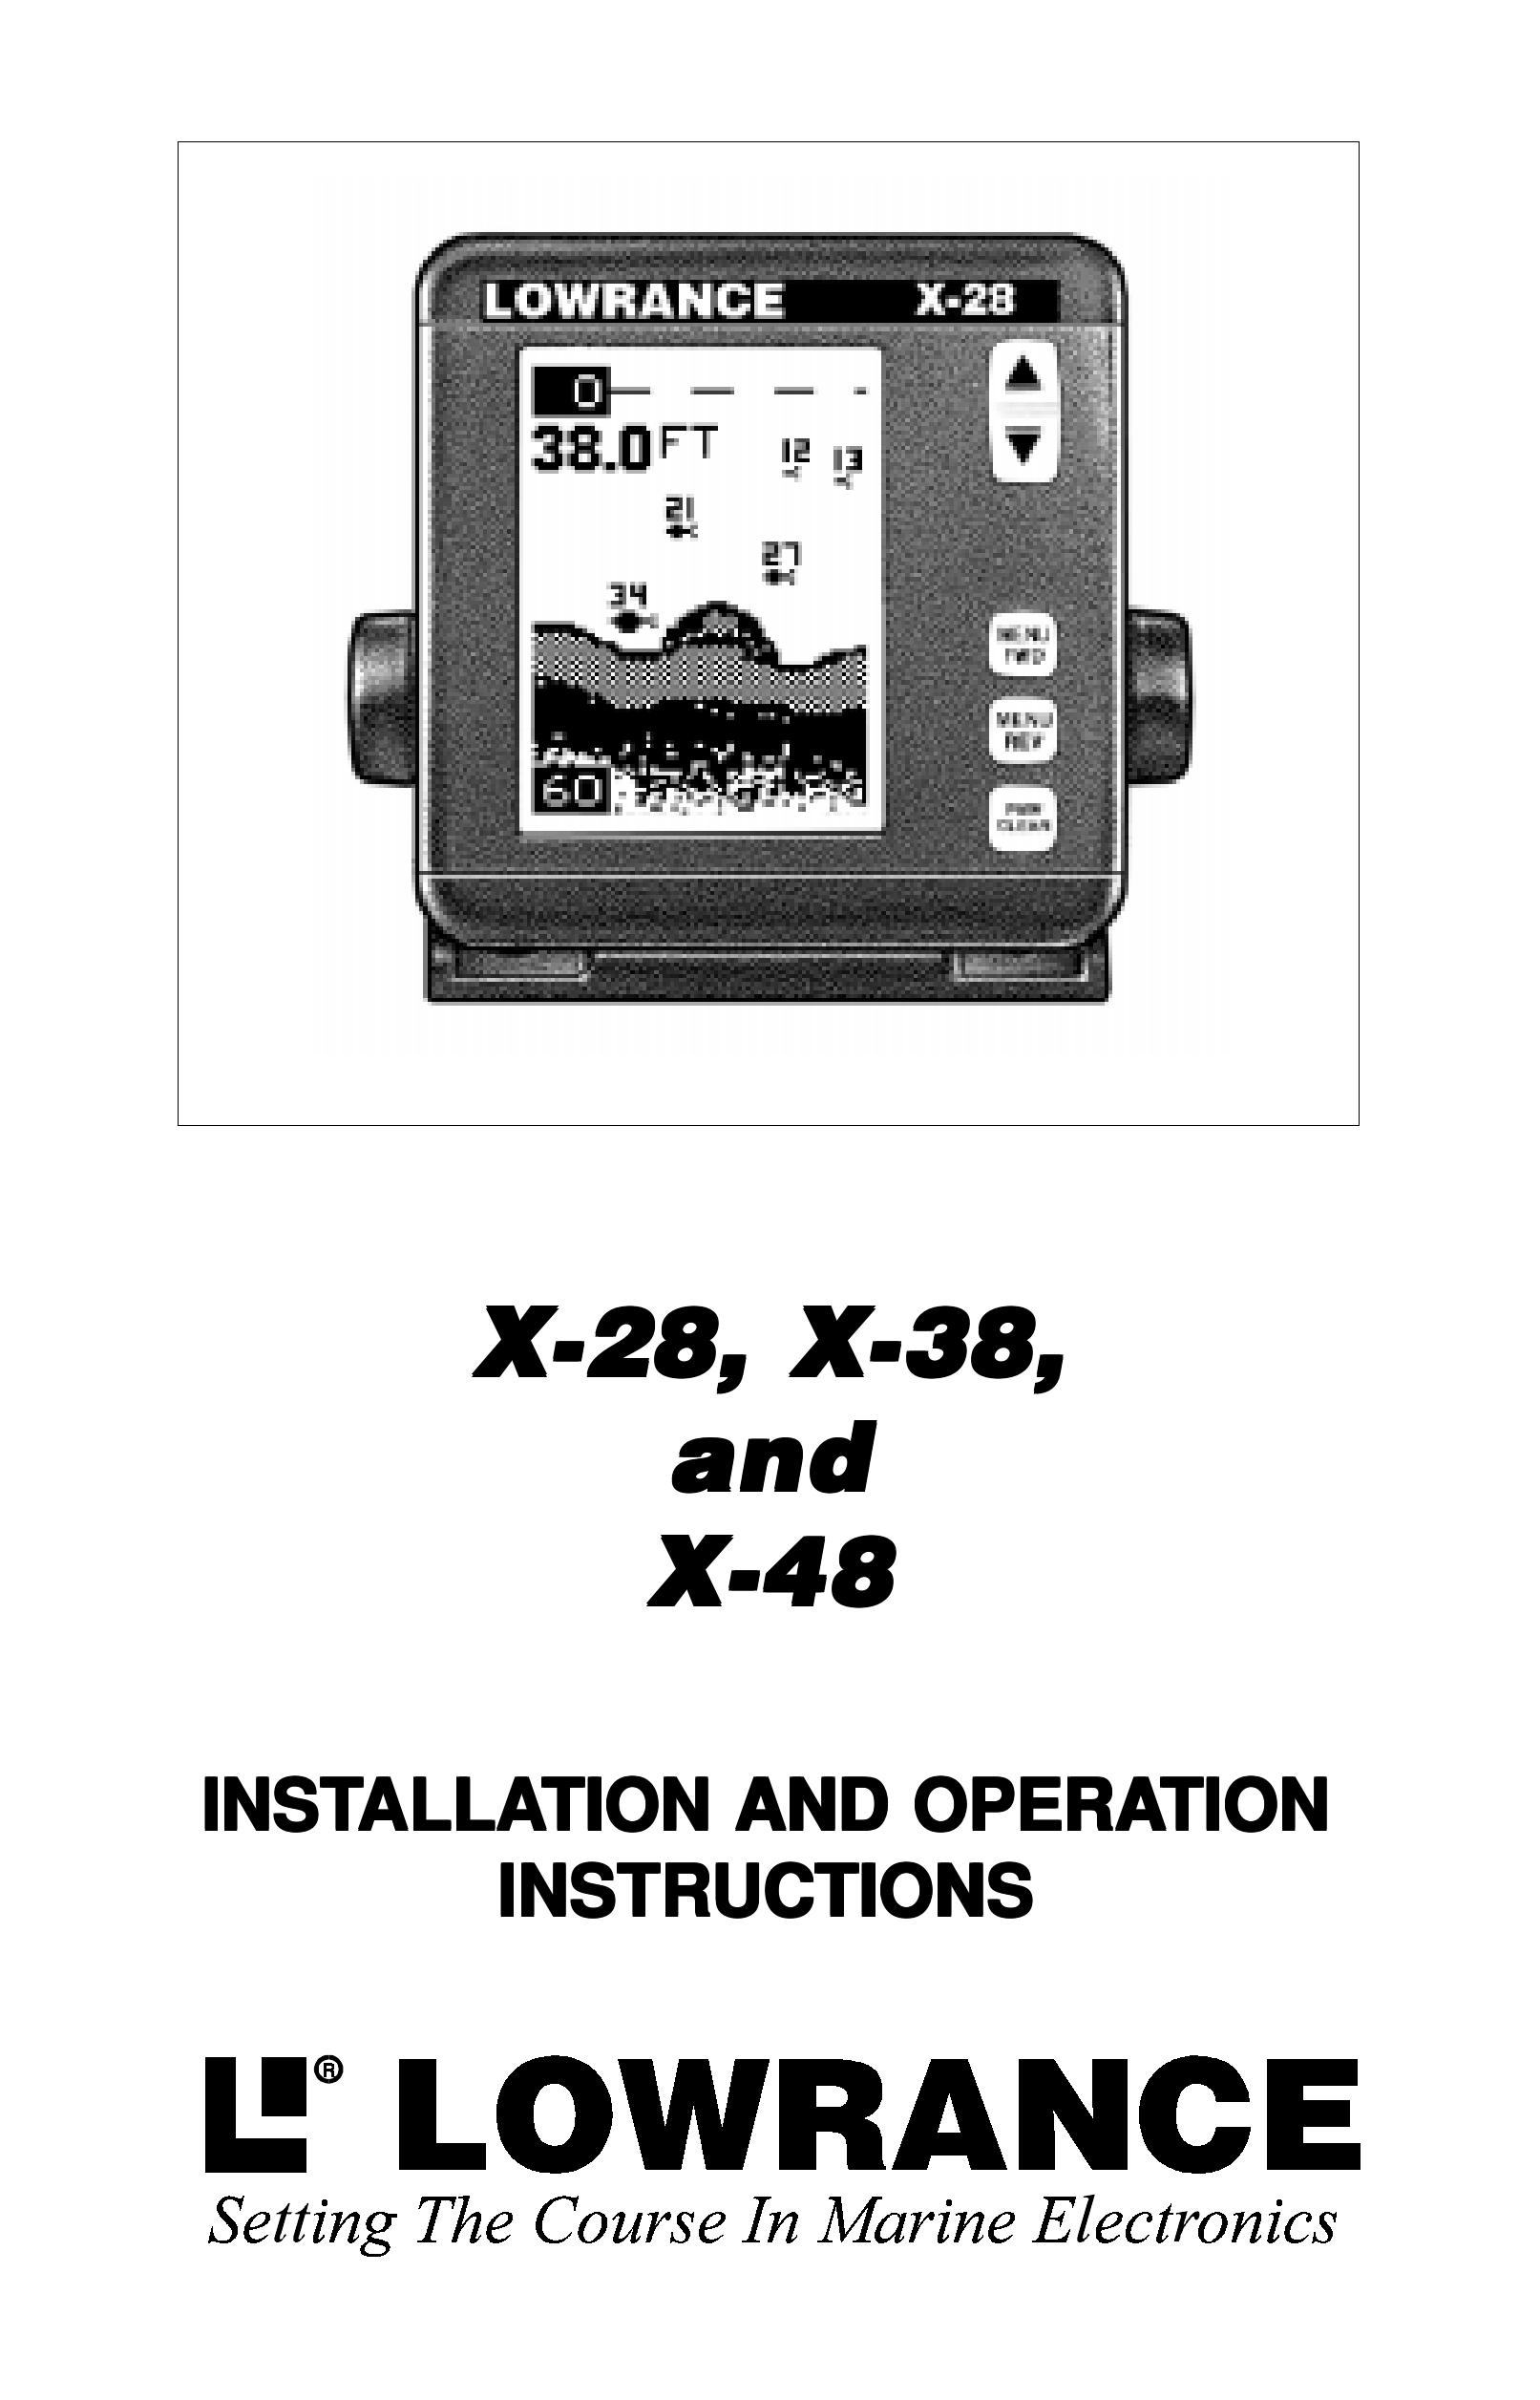 Lowrance electronic X-38 SONAR User Manual